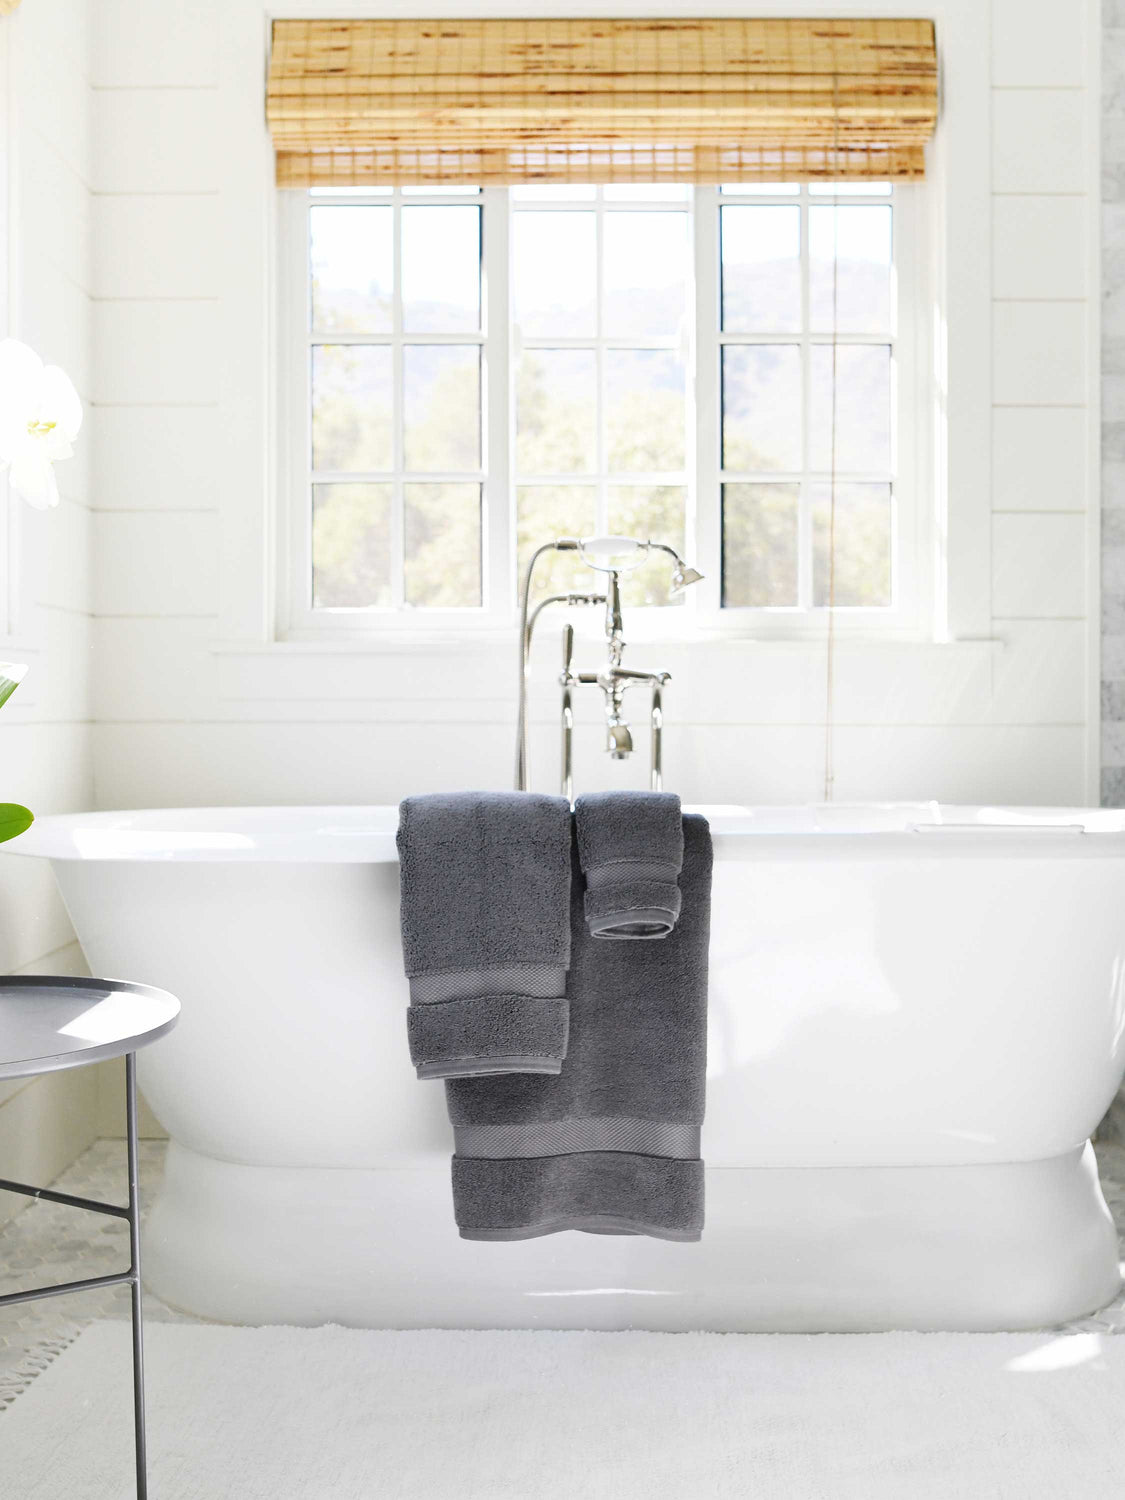 A set of dark gray cotton bath towels draped over the edge of a bathtub.